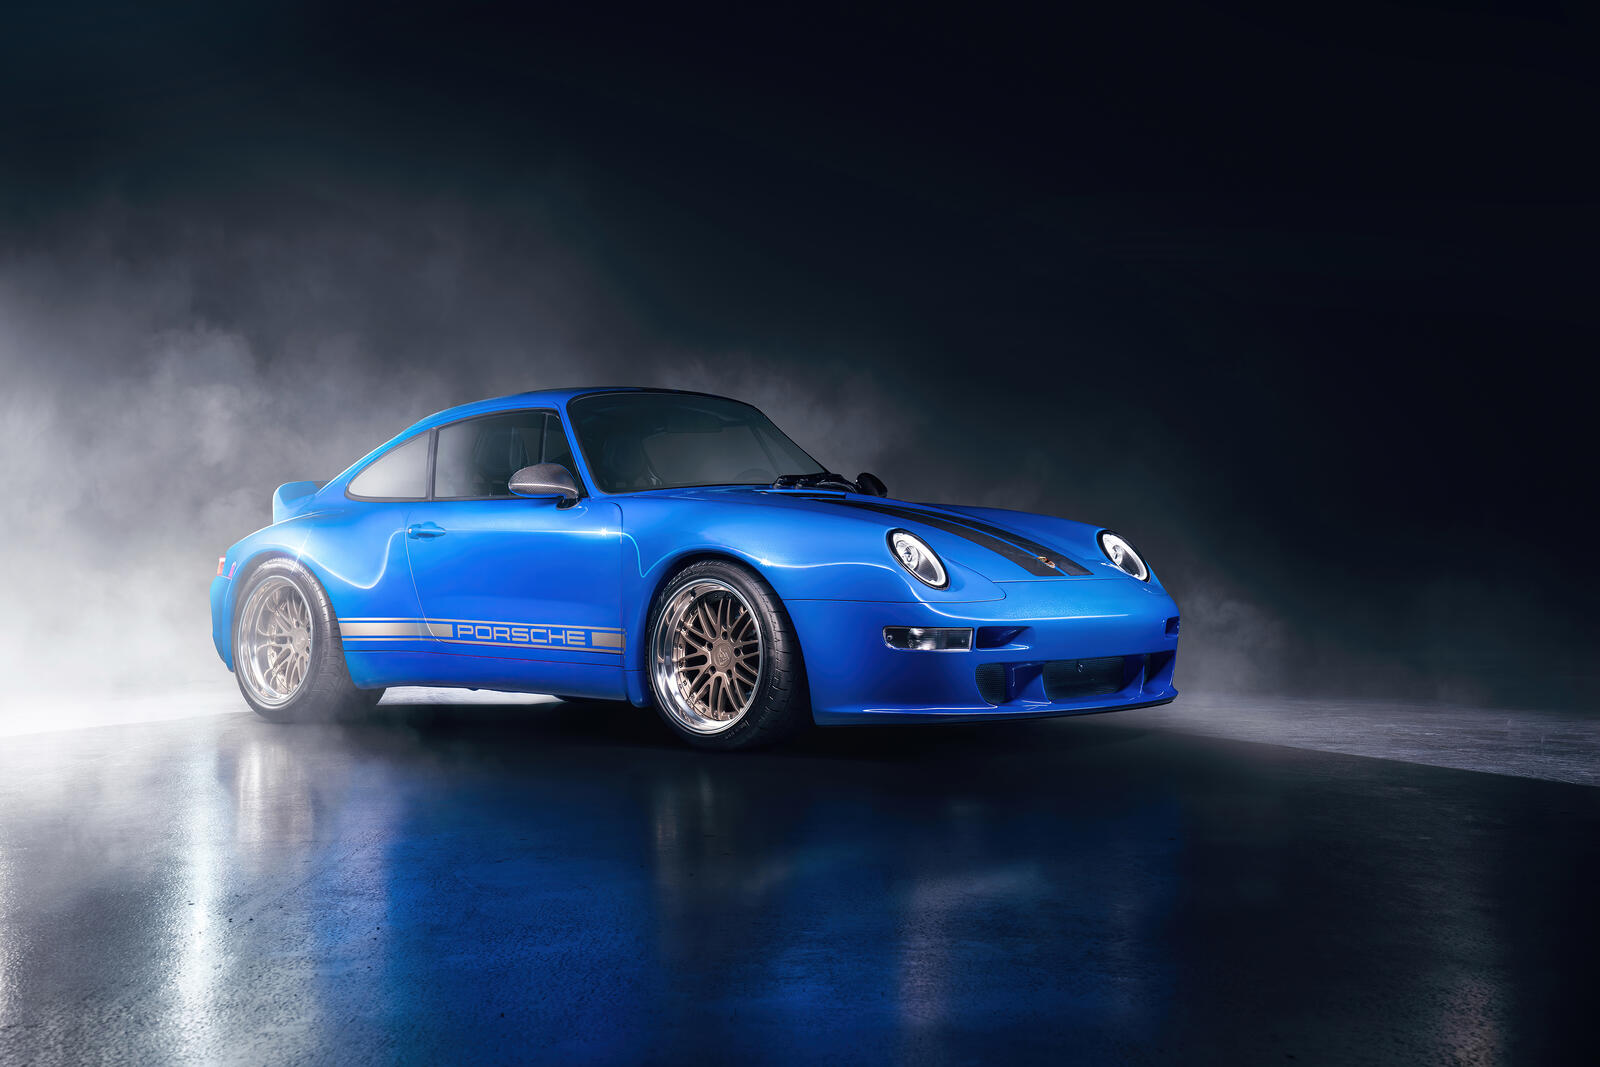 Free photo Blue Porsche 911 in a dark room illuminated by light